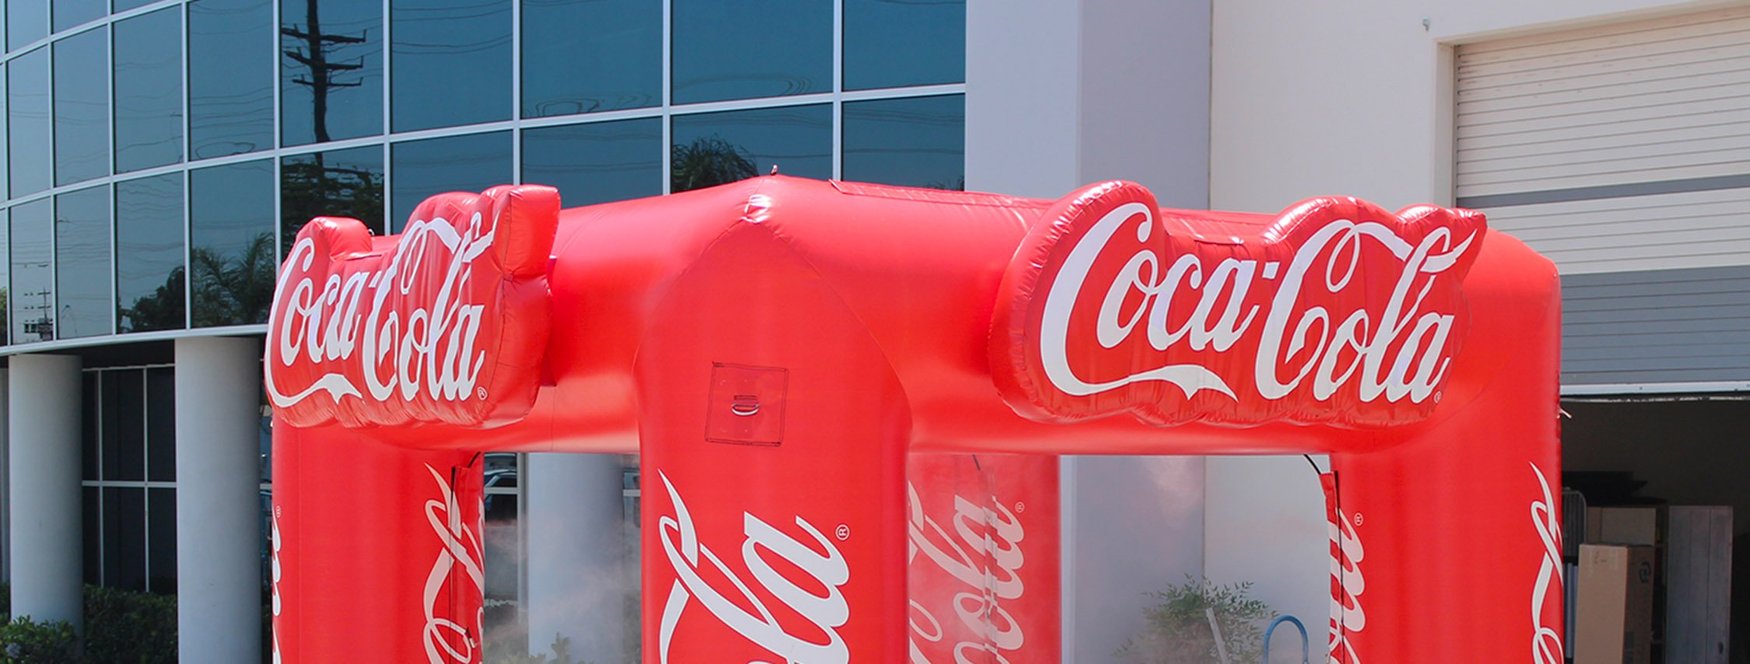 Coca-Cola-misting-tent-header.jpg